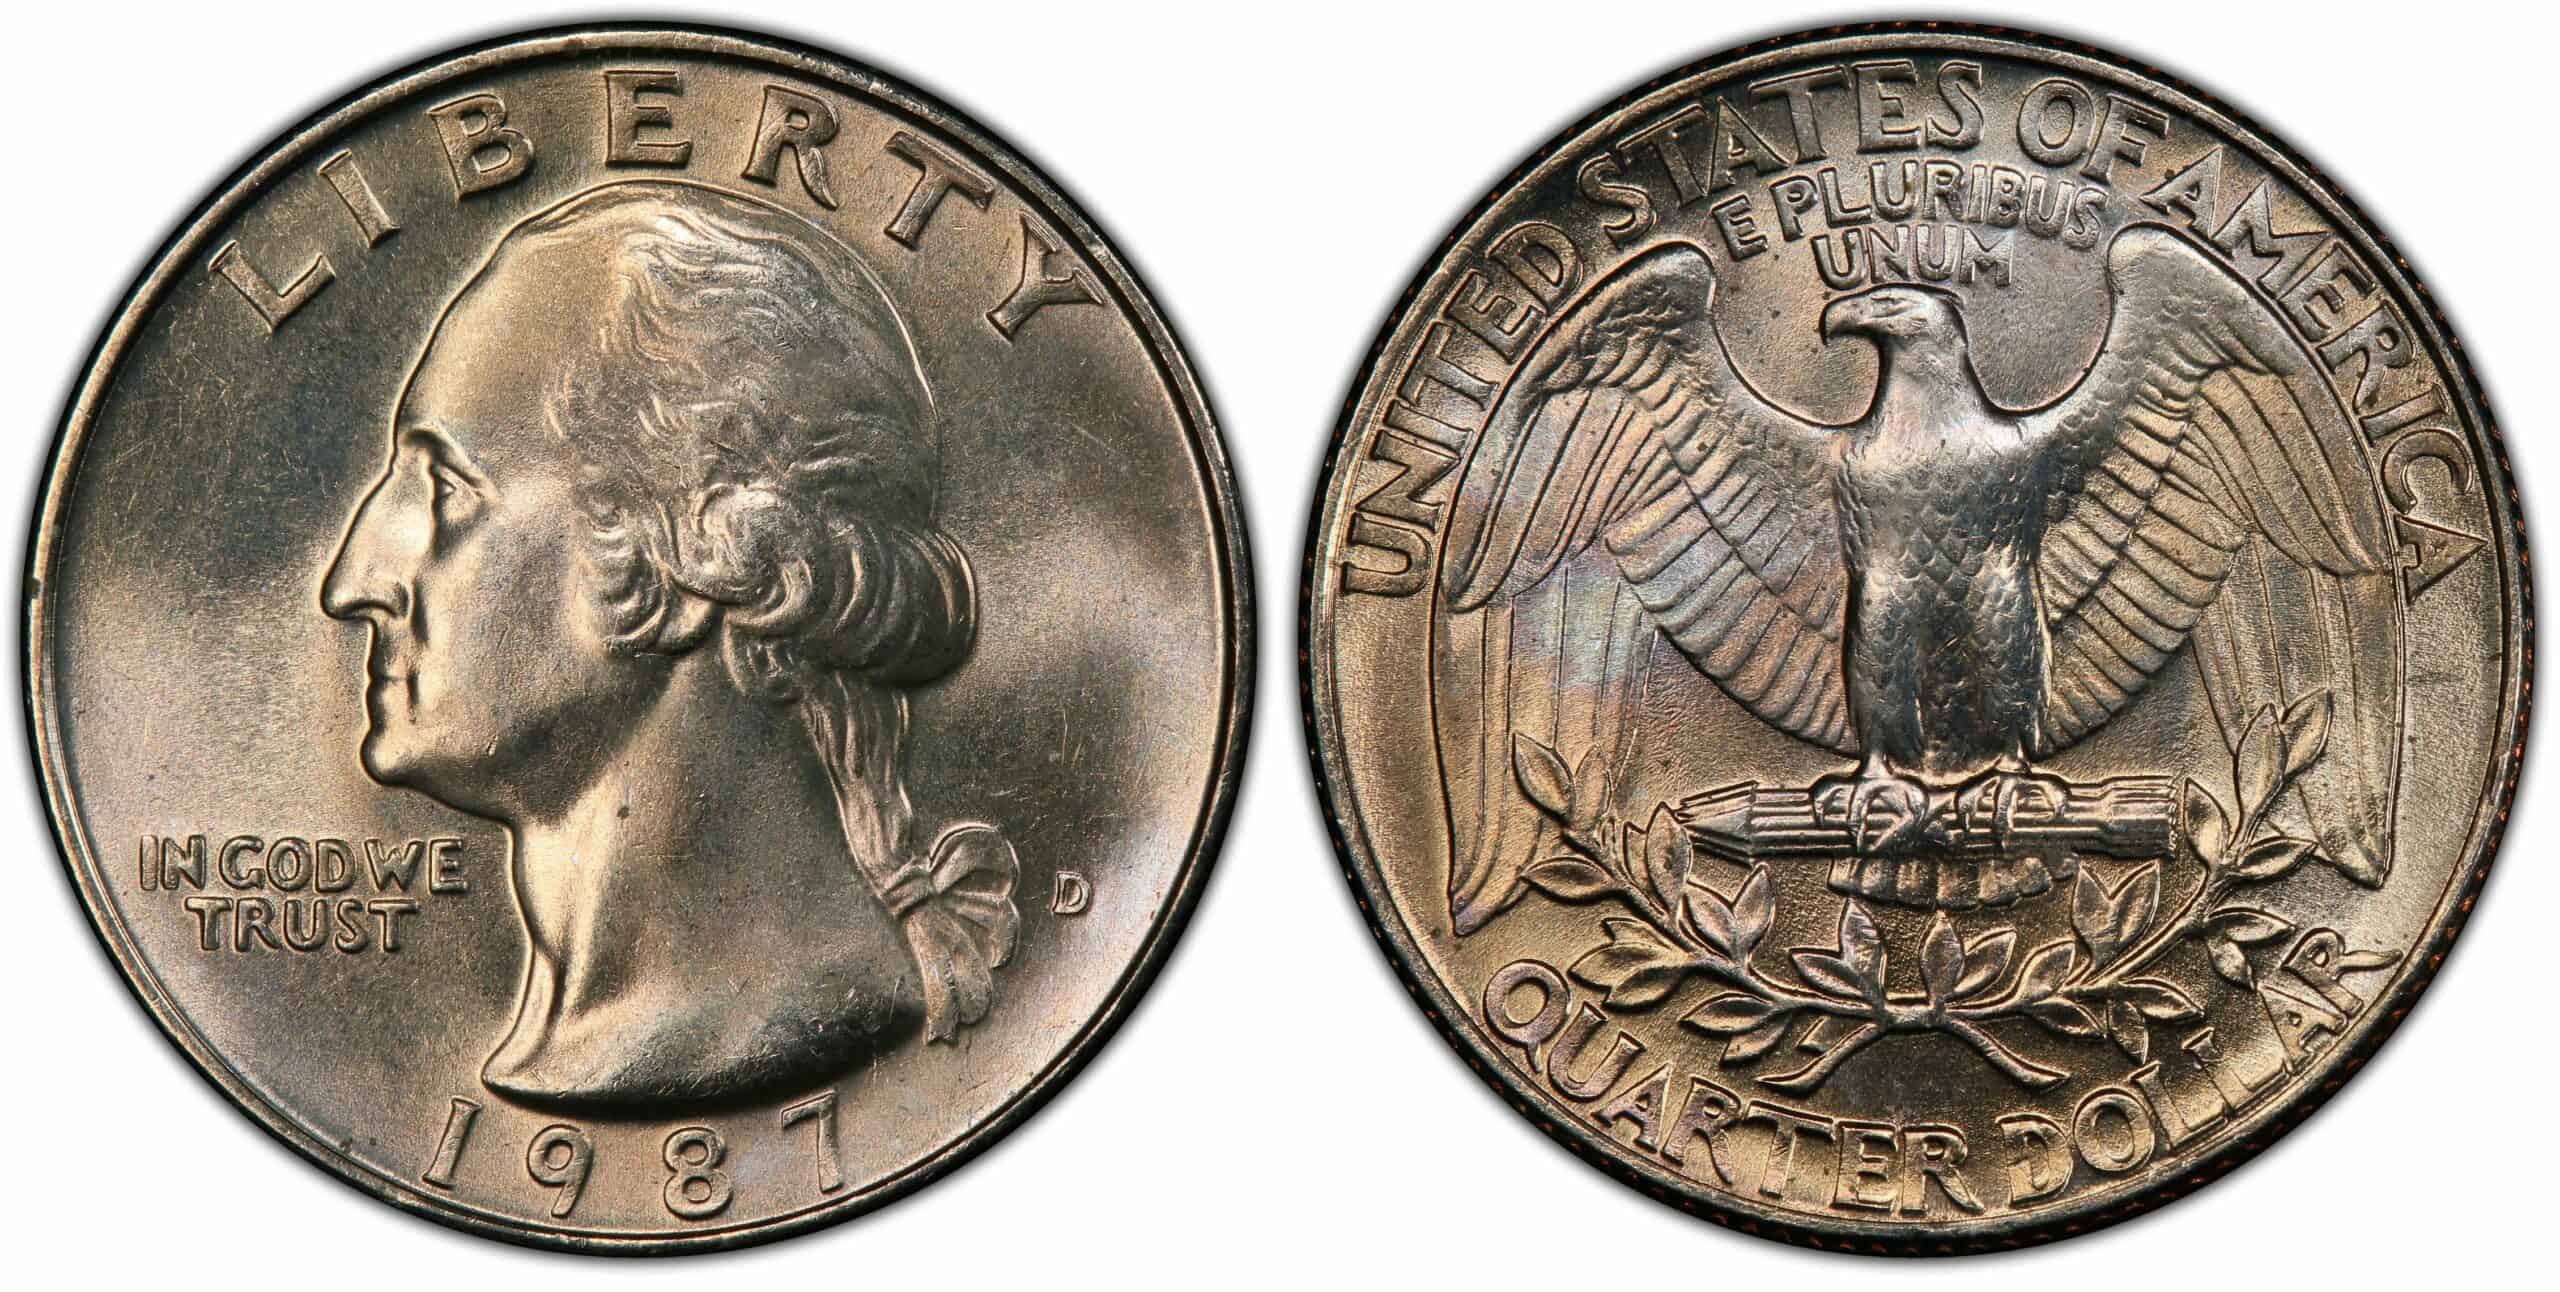 1987 D Quarter